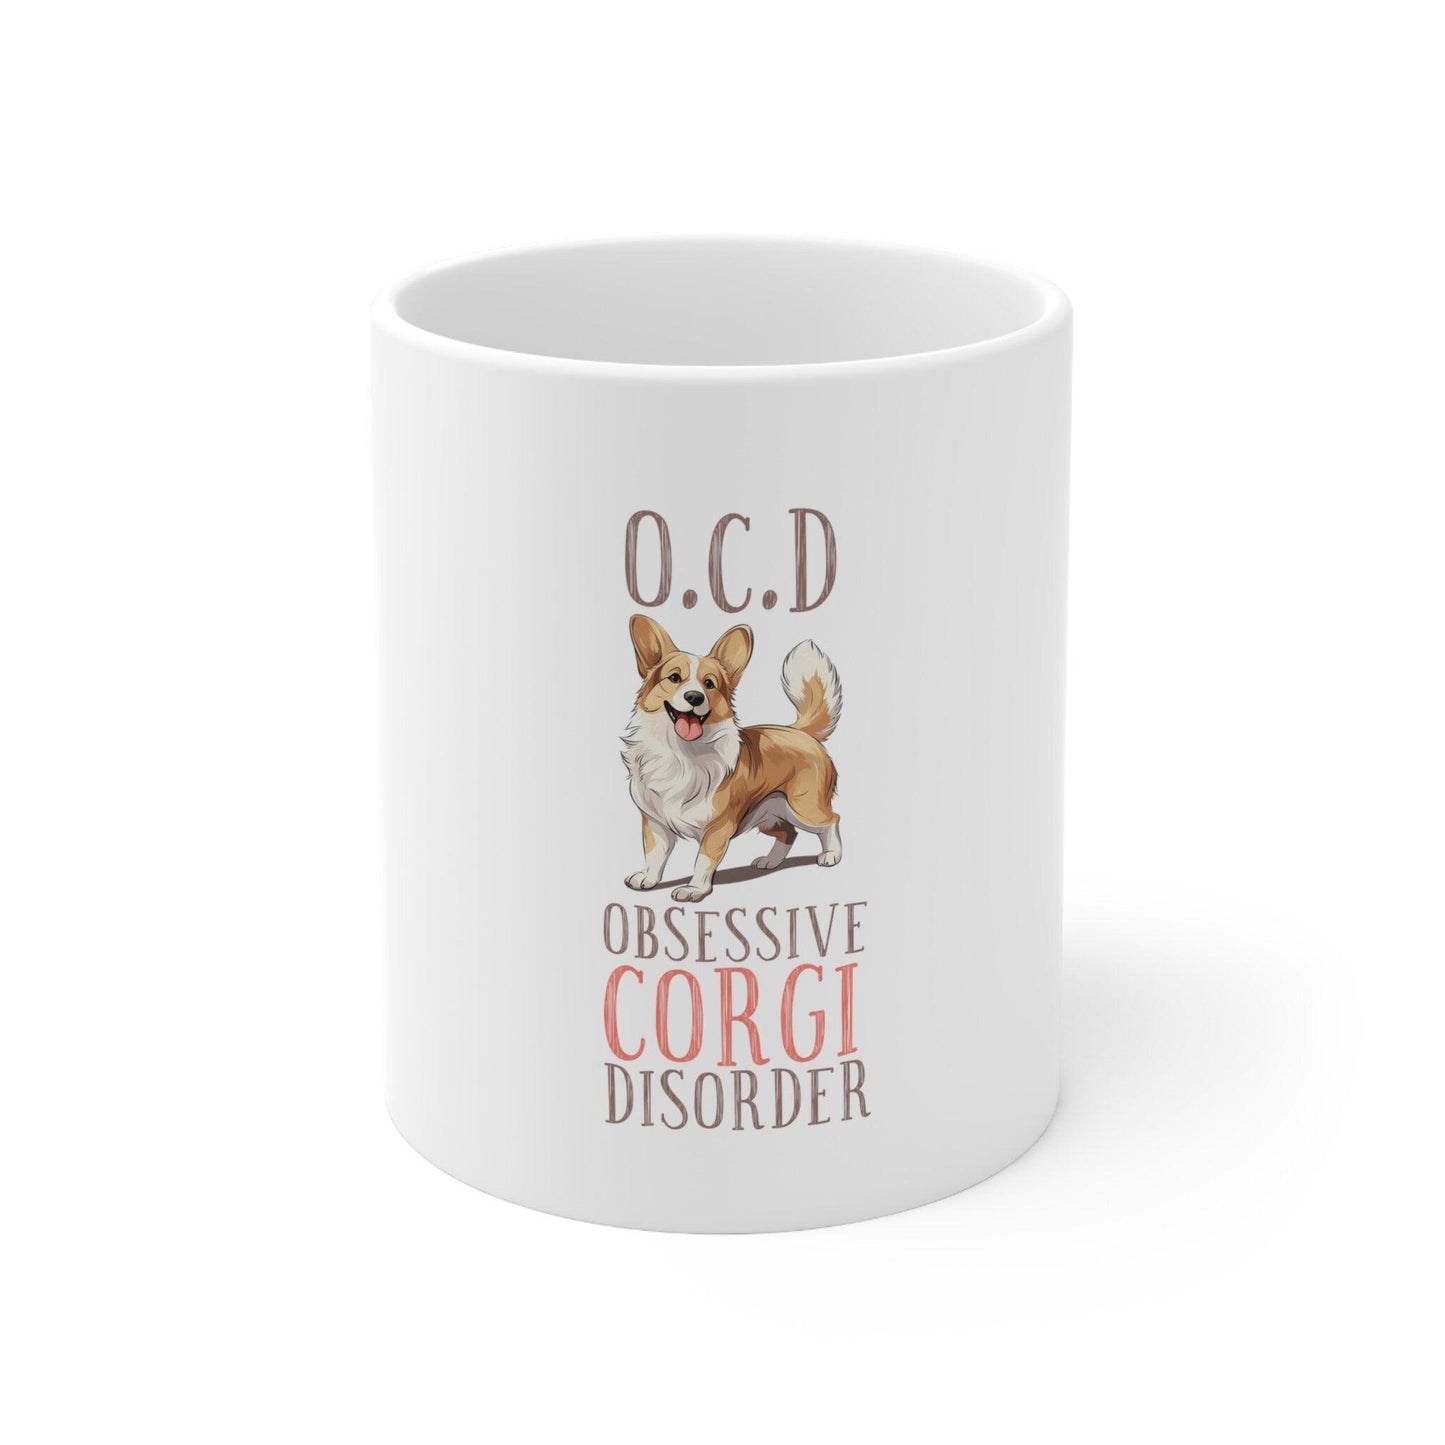 Corgi Dog Lovers gift, Obsessive Corgi Disorder coffee mug, dog mugs, dog lover gifts - Canadohta Custom Creations LLC